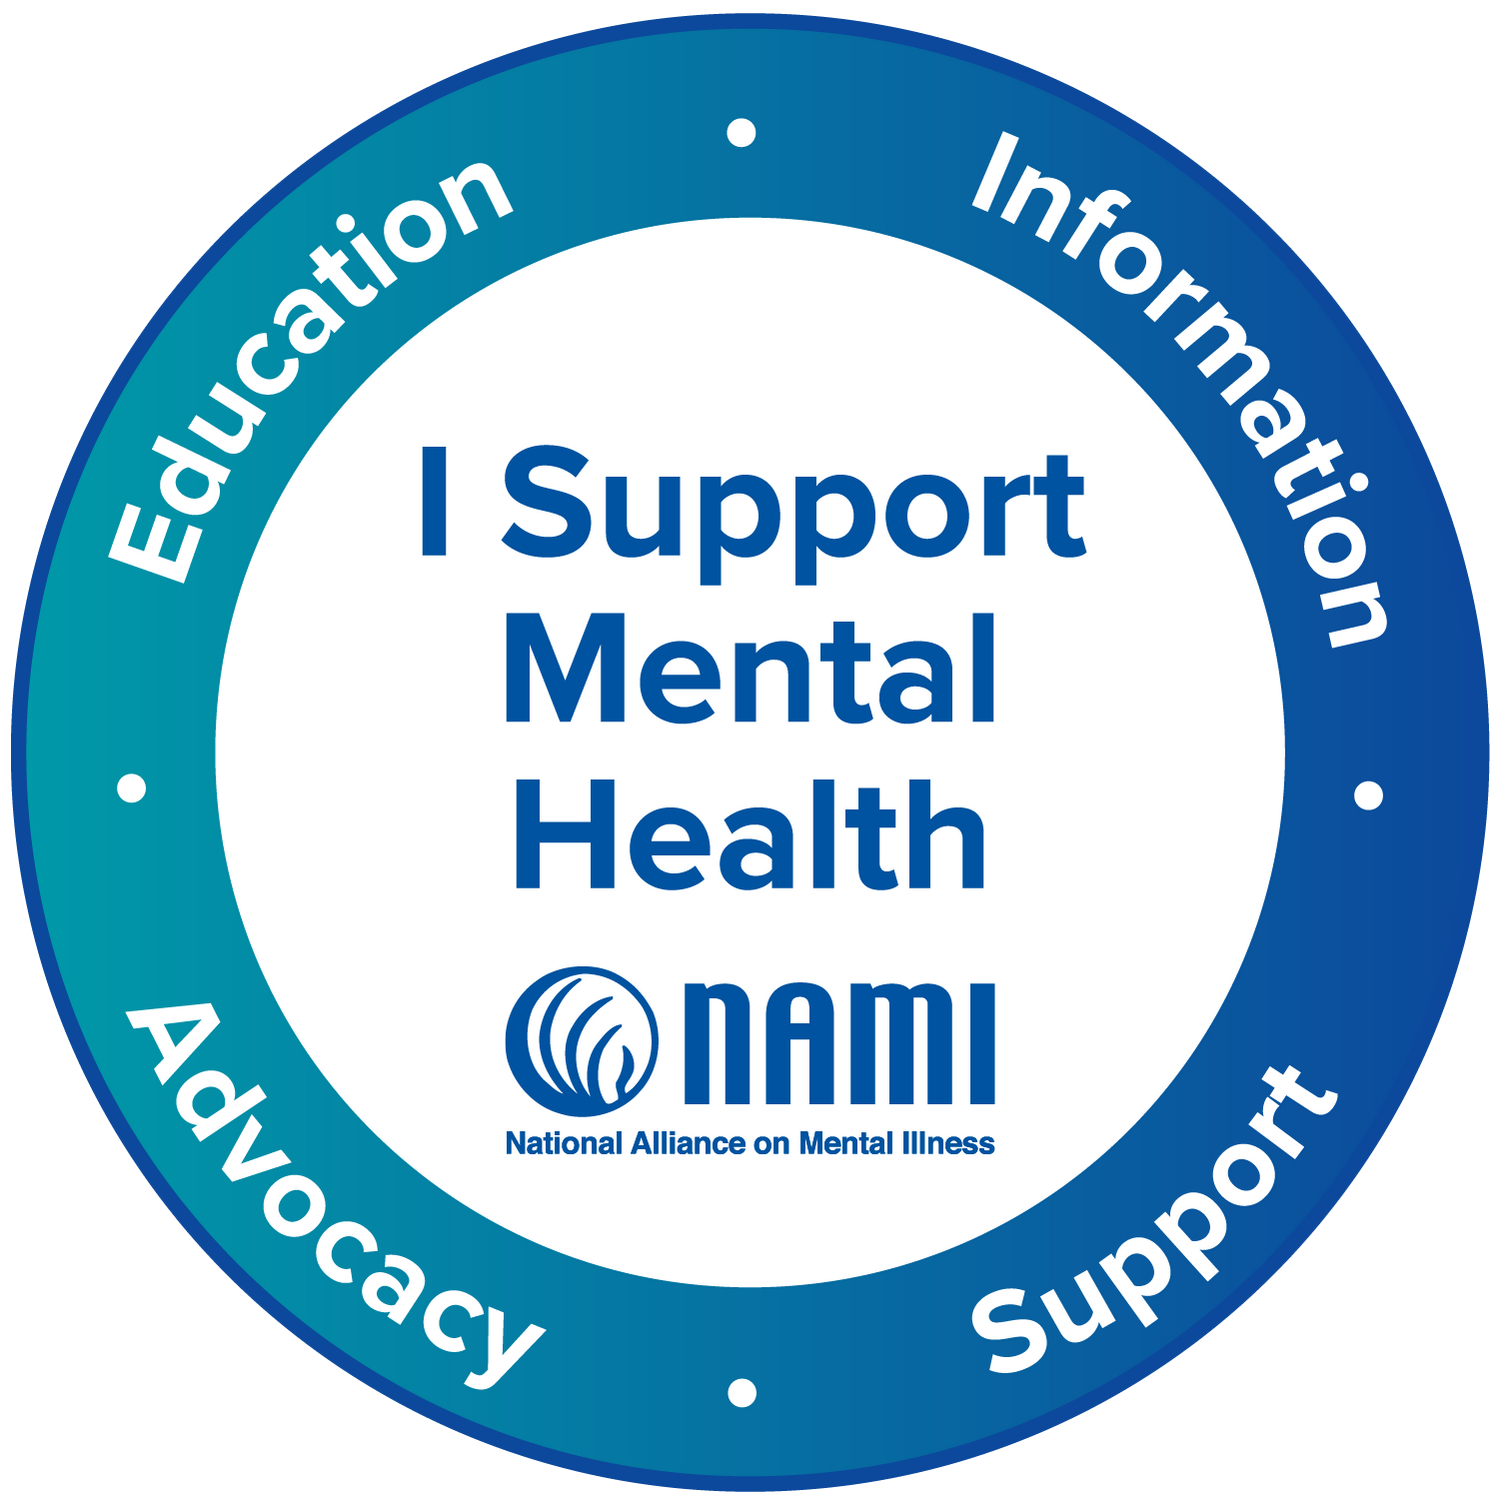 NAMI: National Alliance on Mental Health